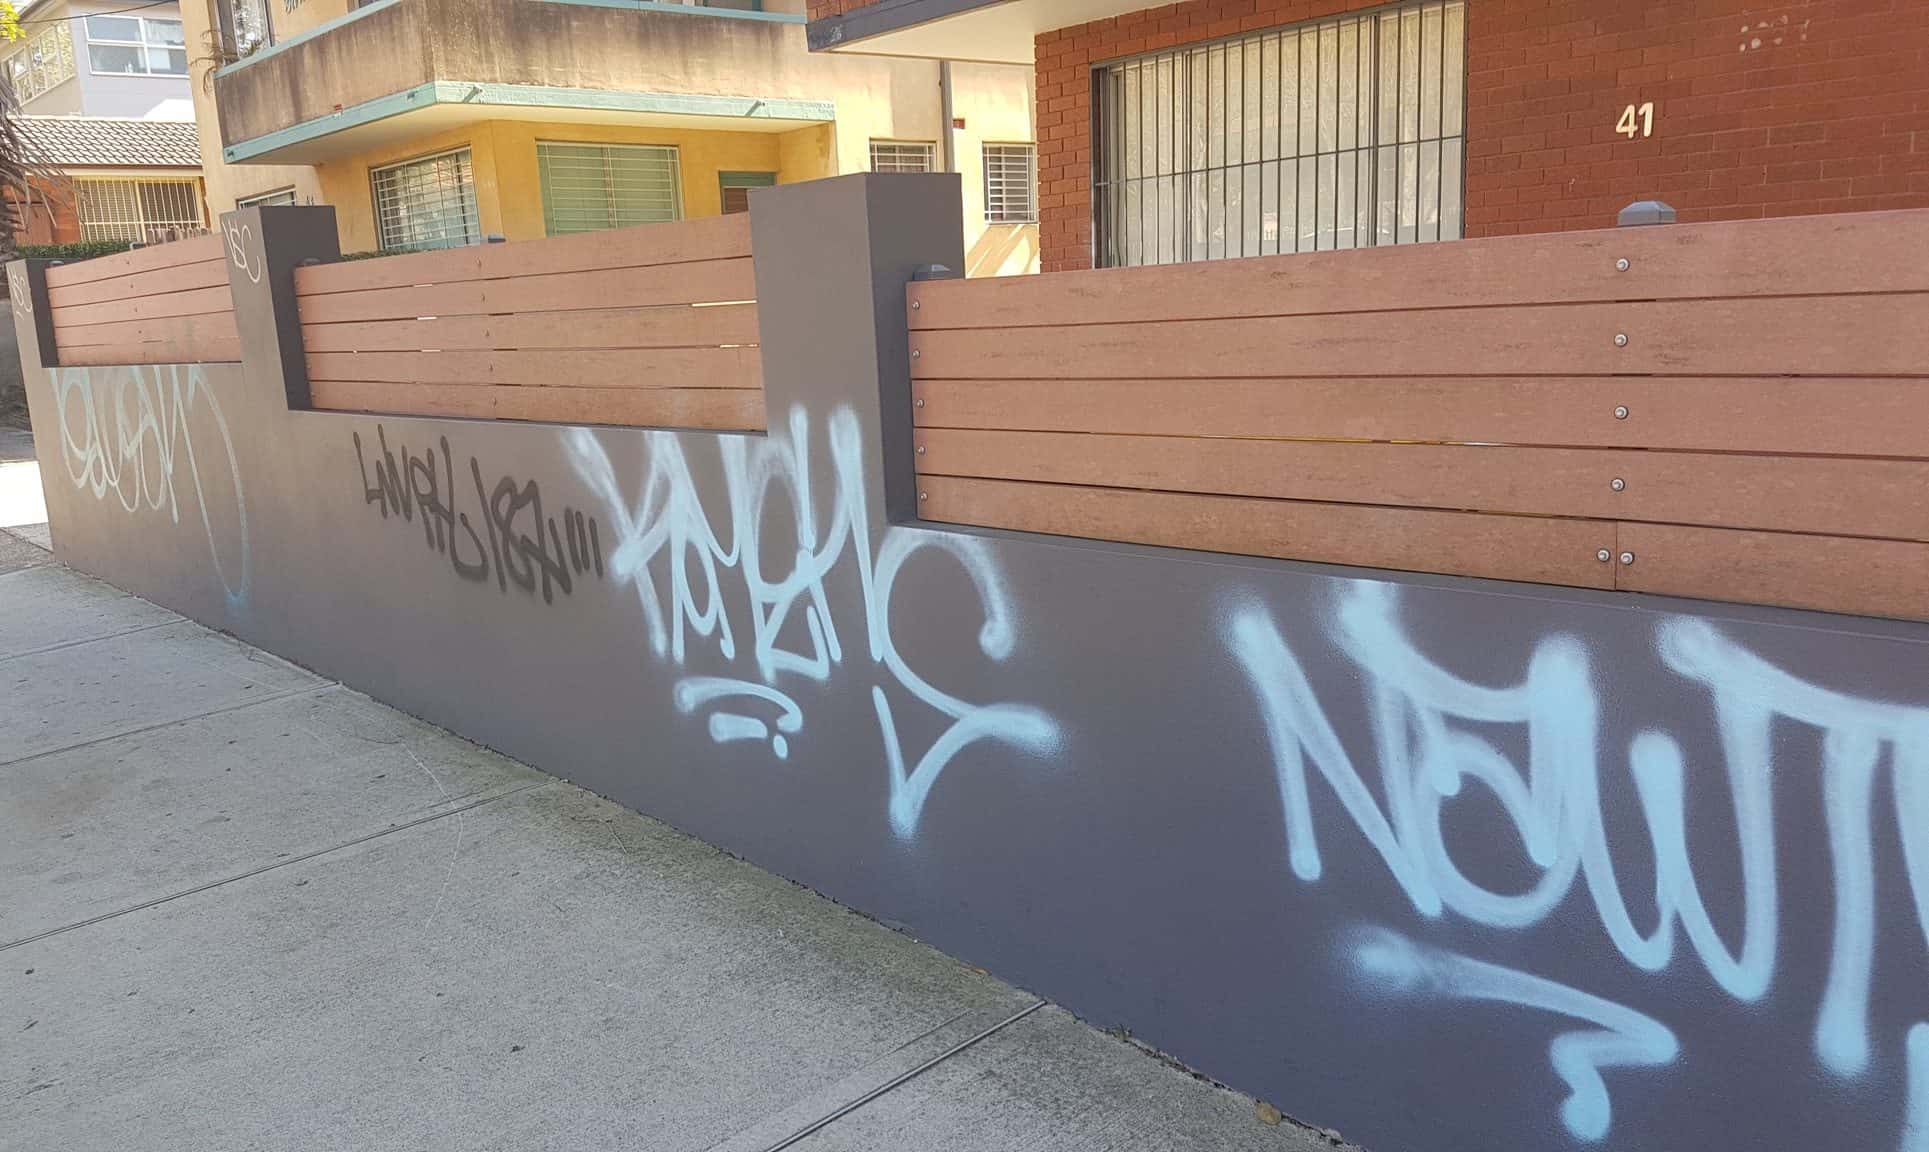 Graffiti Cleaning Sydney